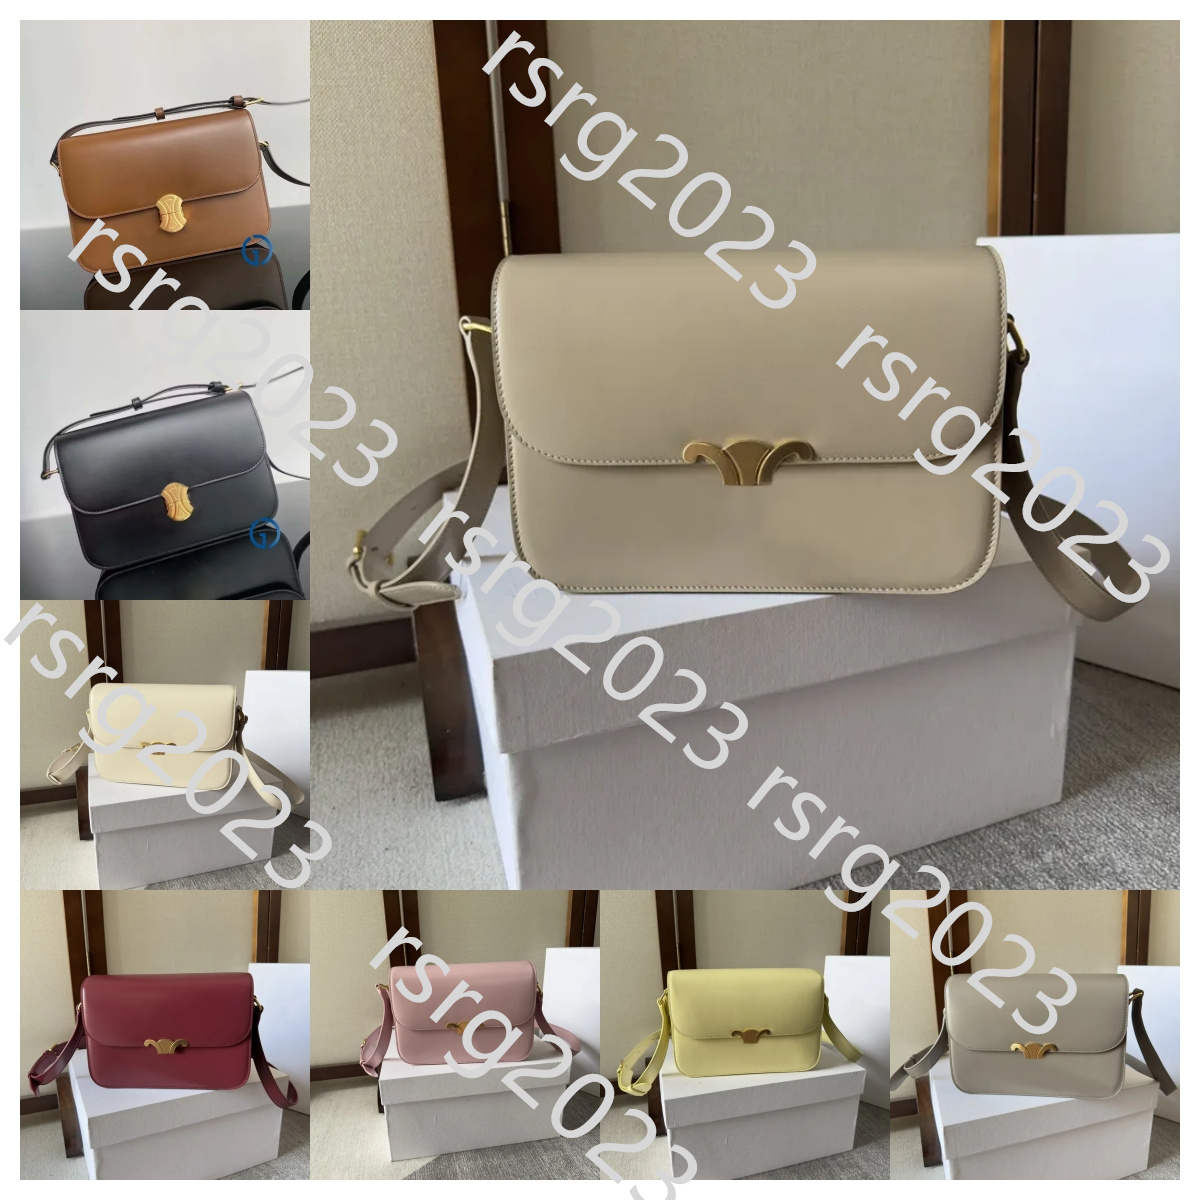 10A 22K Triomphes Bag Shoulder Designer Mini Bags Classic Envelope Hobo Messenger Genuine Leather Handbags Top Quality